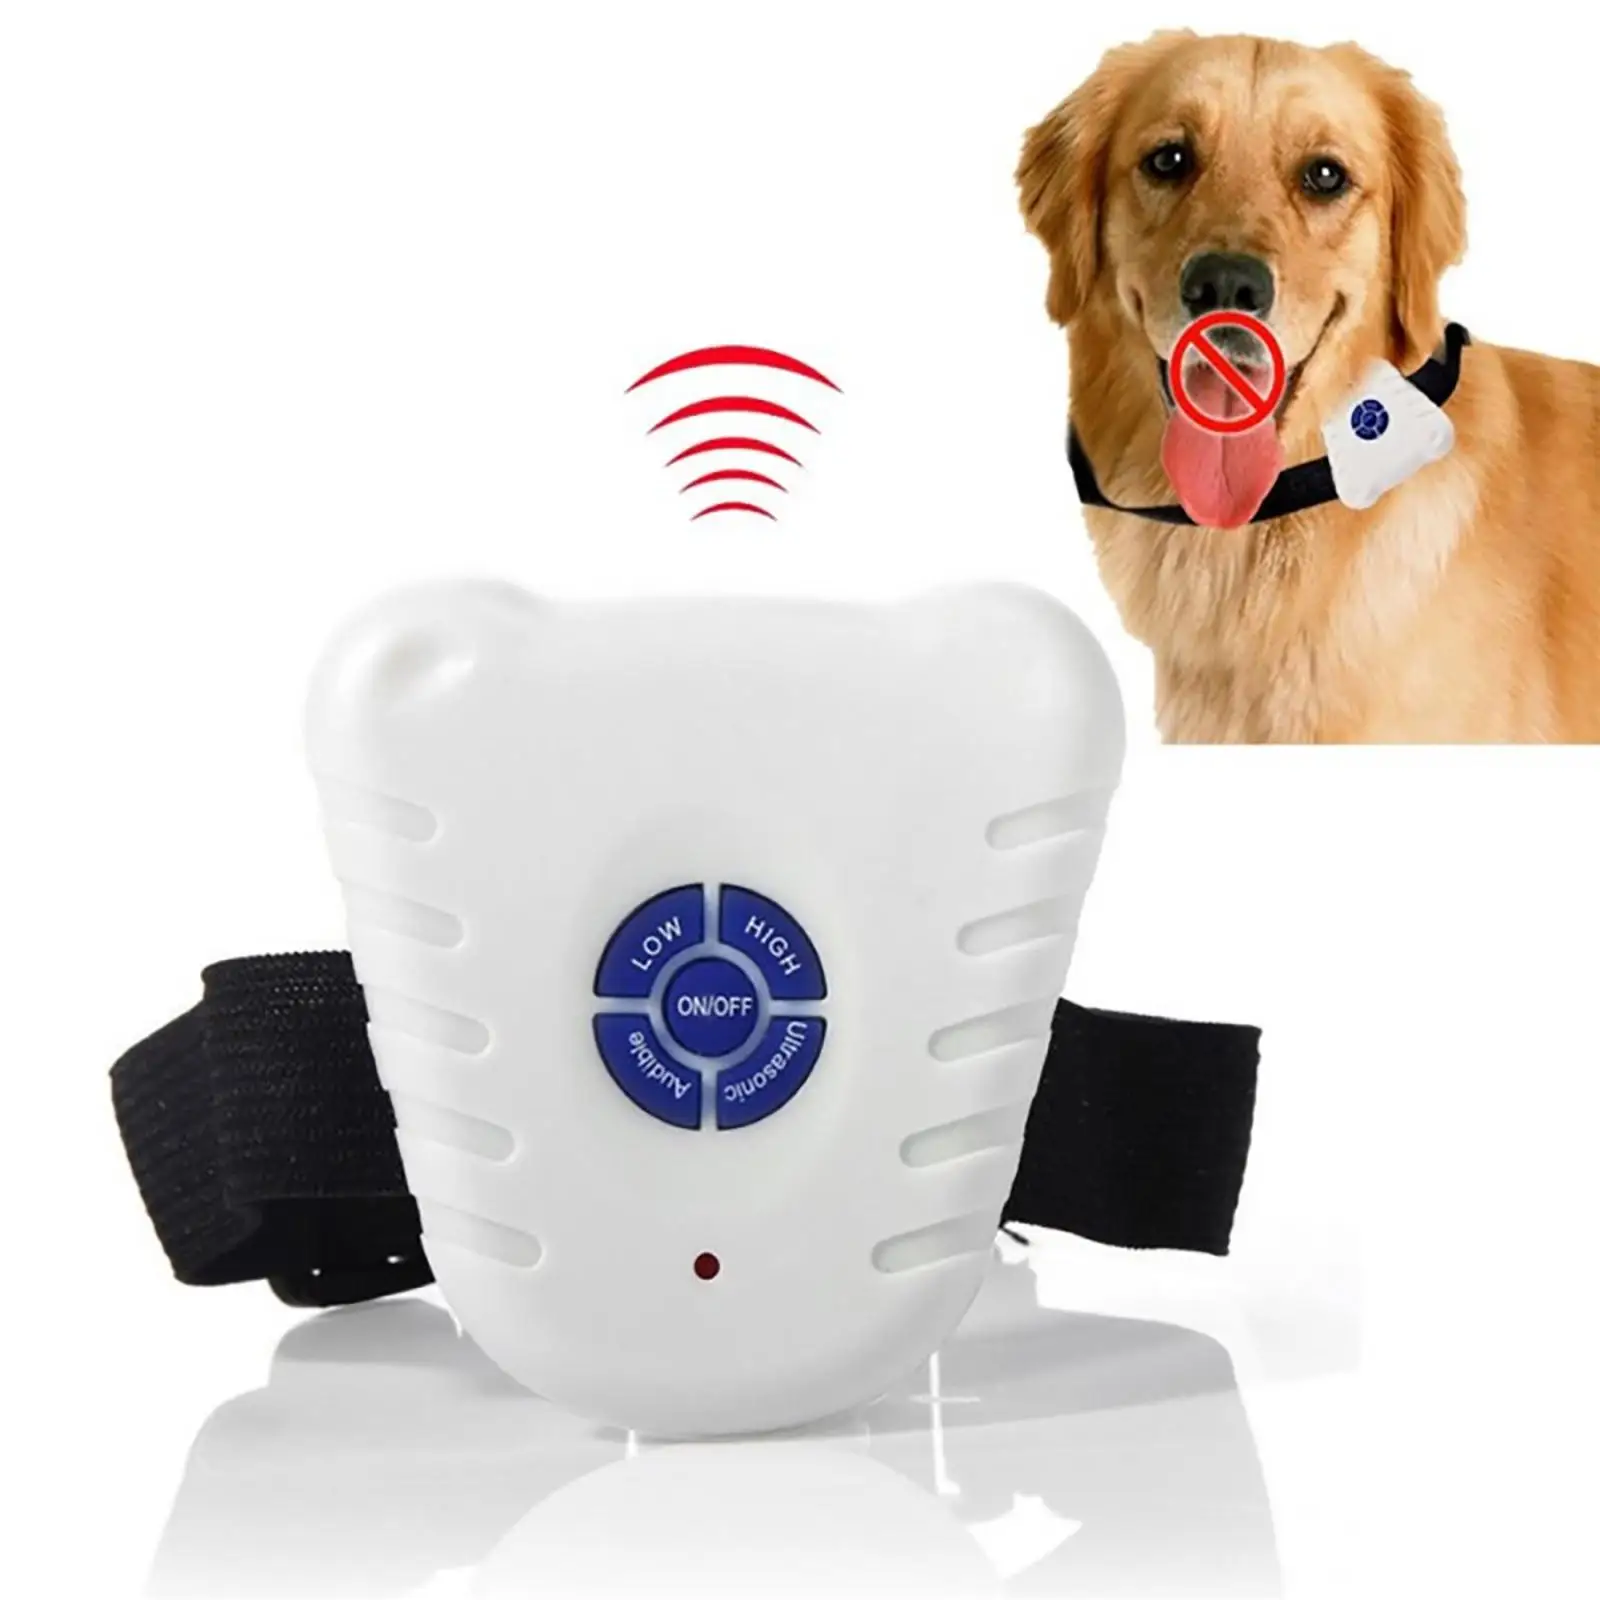 Ultrasonic Training Device Waterproof Electric Adjustable No Bark Supplies Clicker Portable Barking Control Collar for Dog Pet